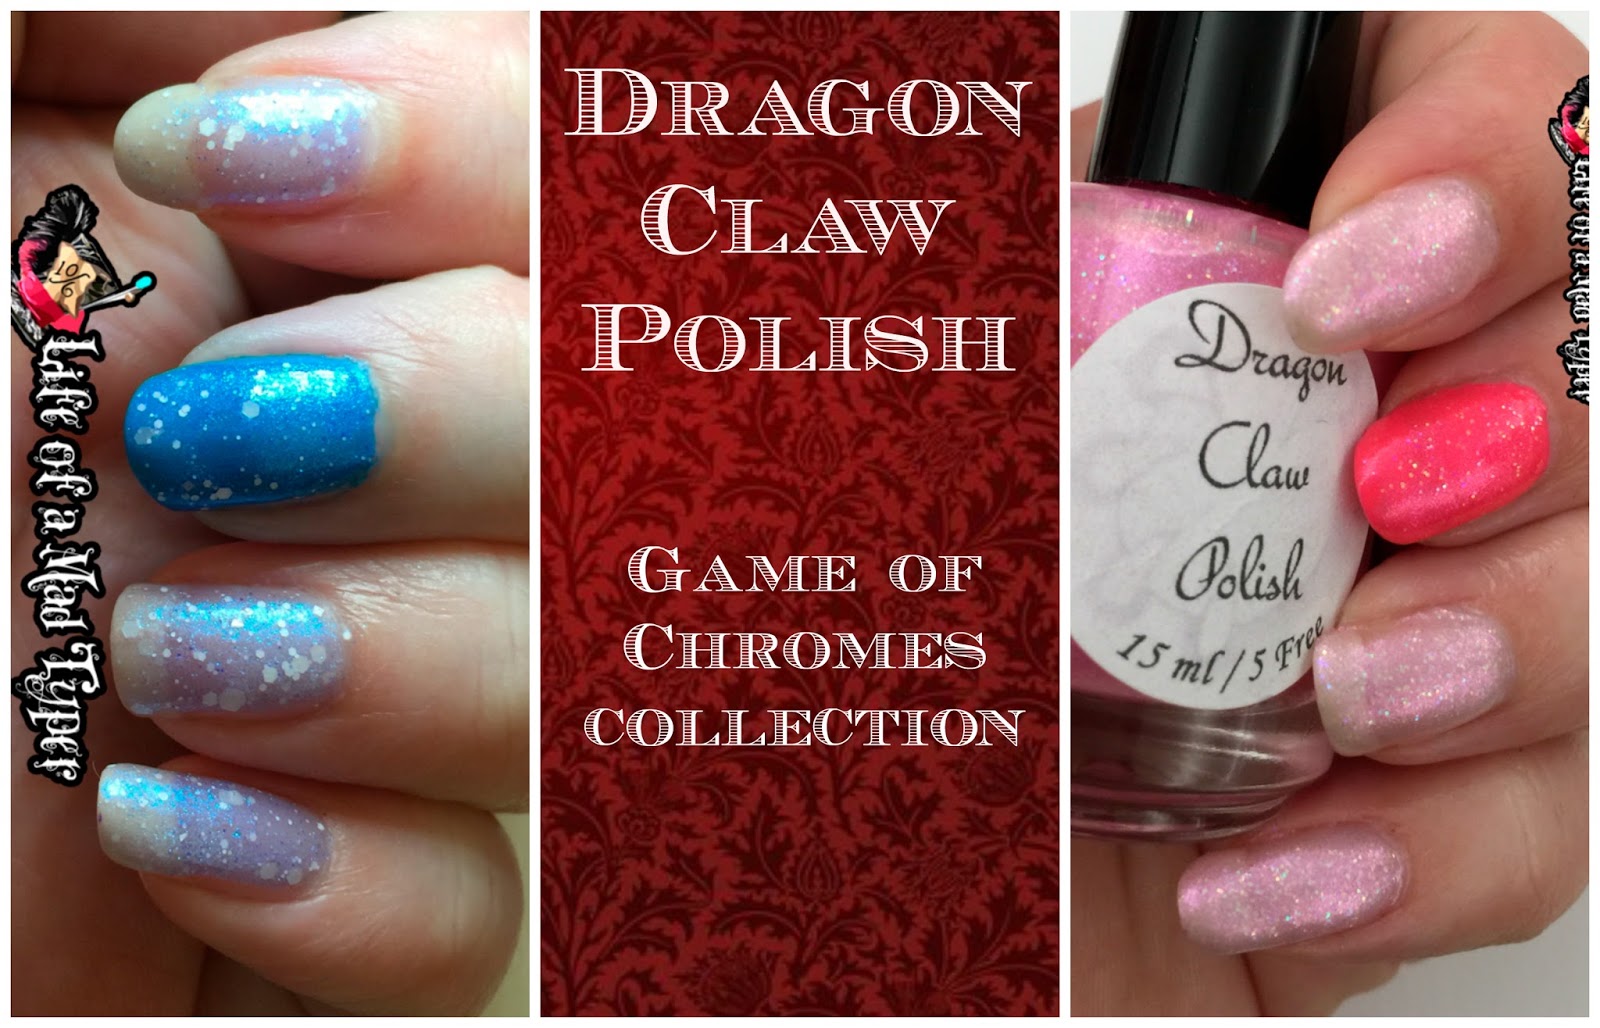 Dragon Claw polish Game of Chromes collection!